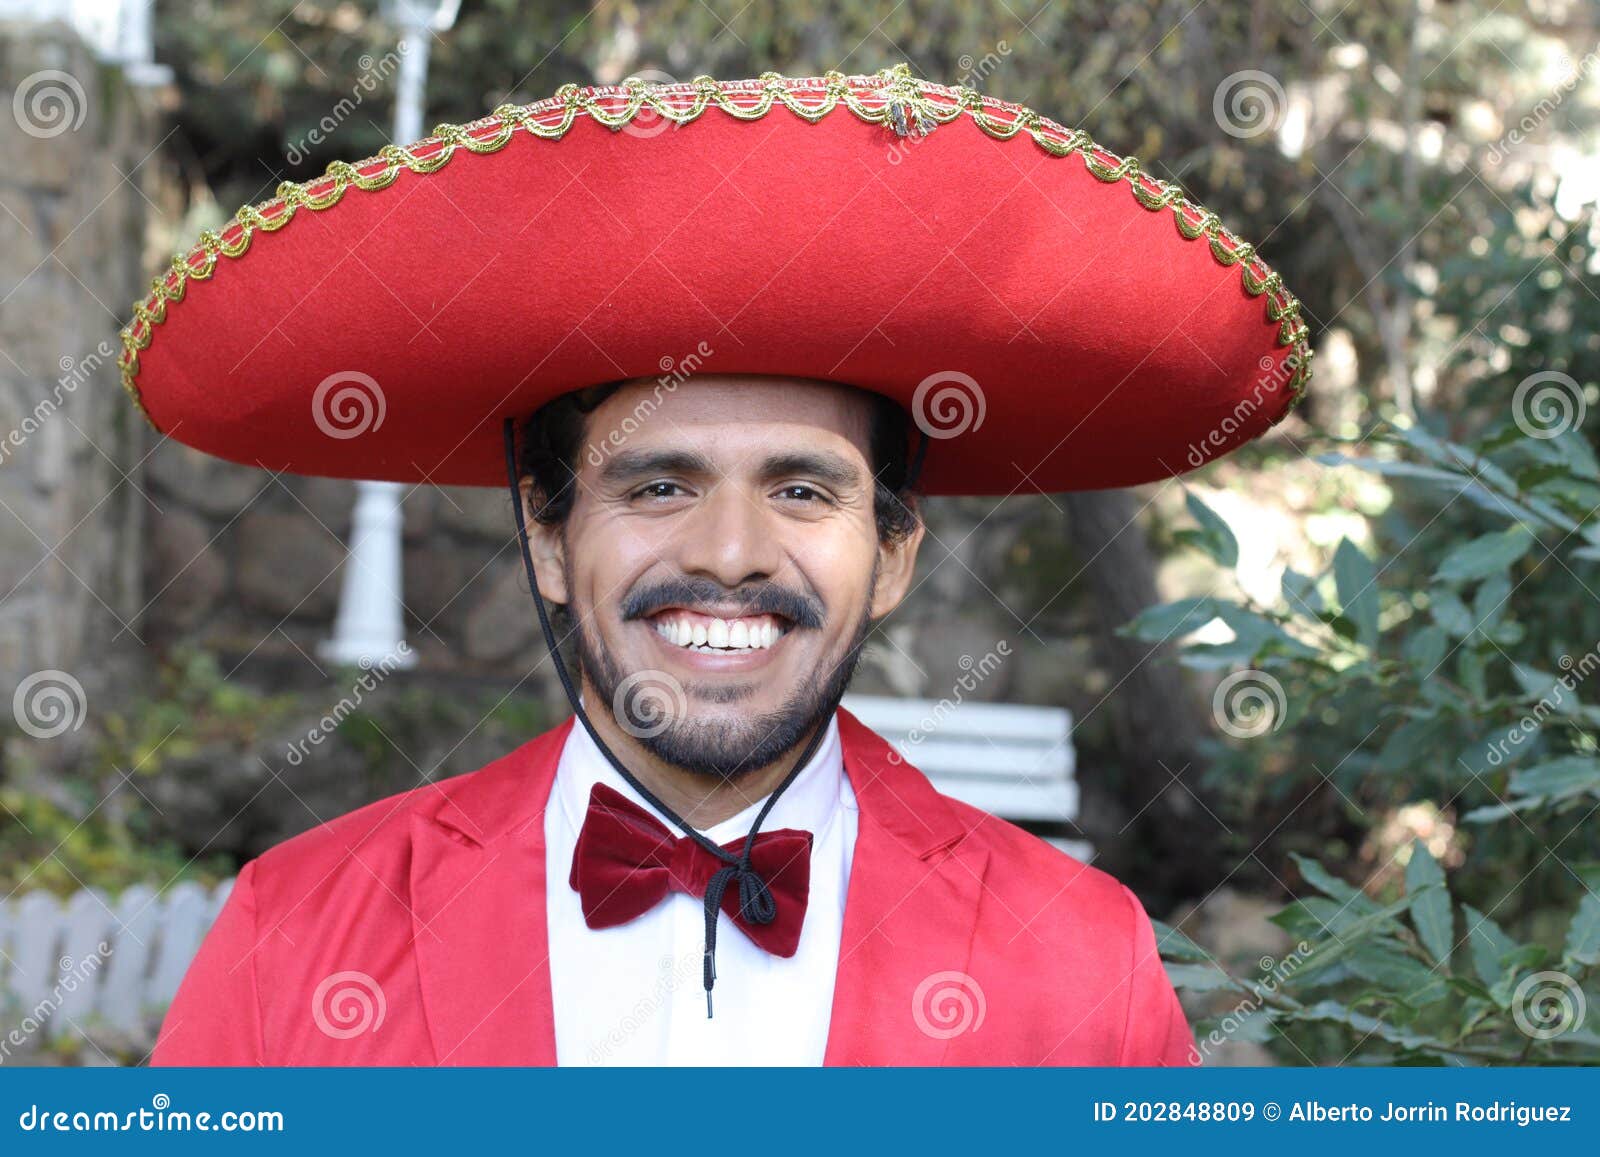 Guapo Mariachi Con Traje Rojo de archivo - de carnaval, persona: 202848809